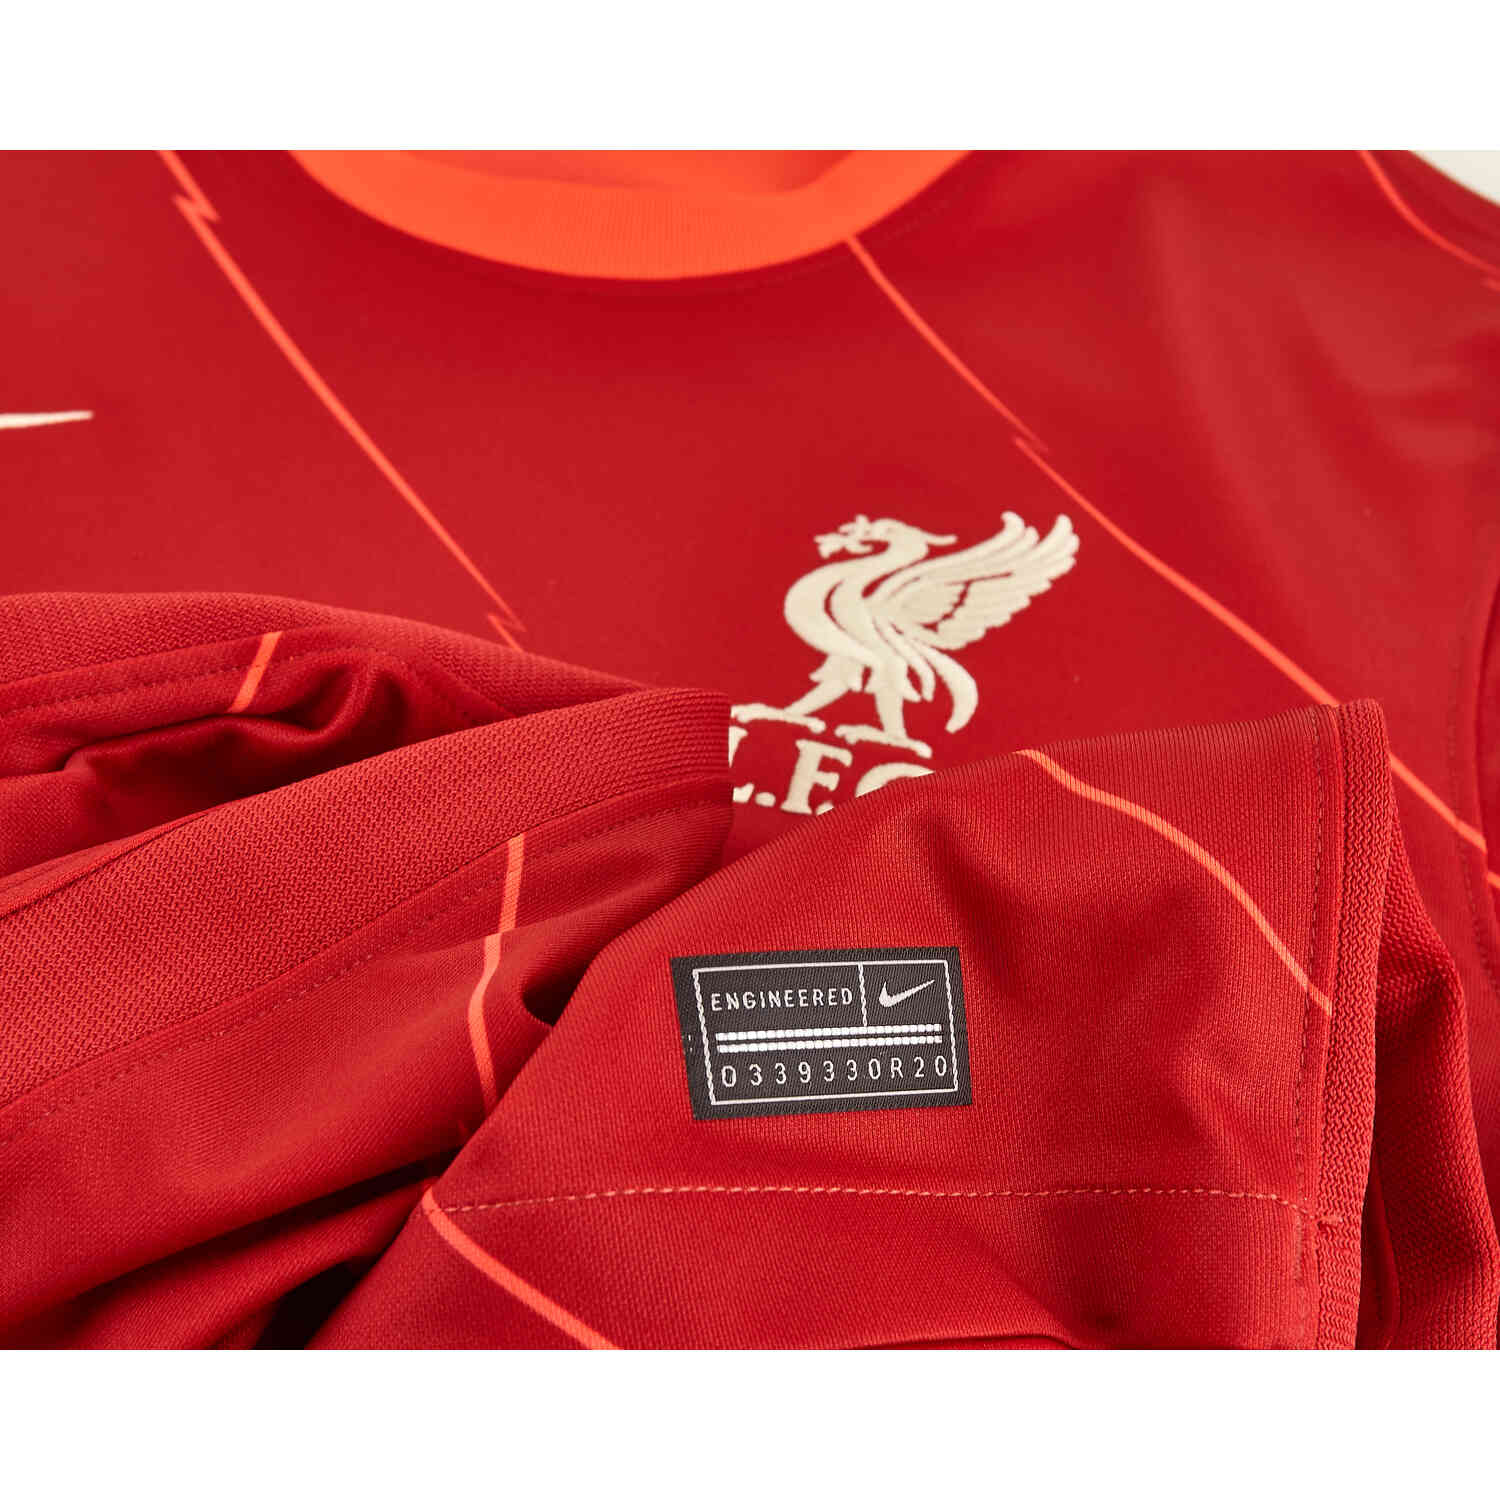 2021/22 Nike James Milner Liverpool Home Match Jersey - SoccerPro